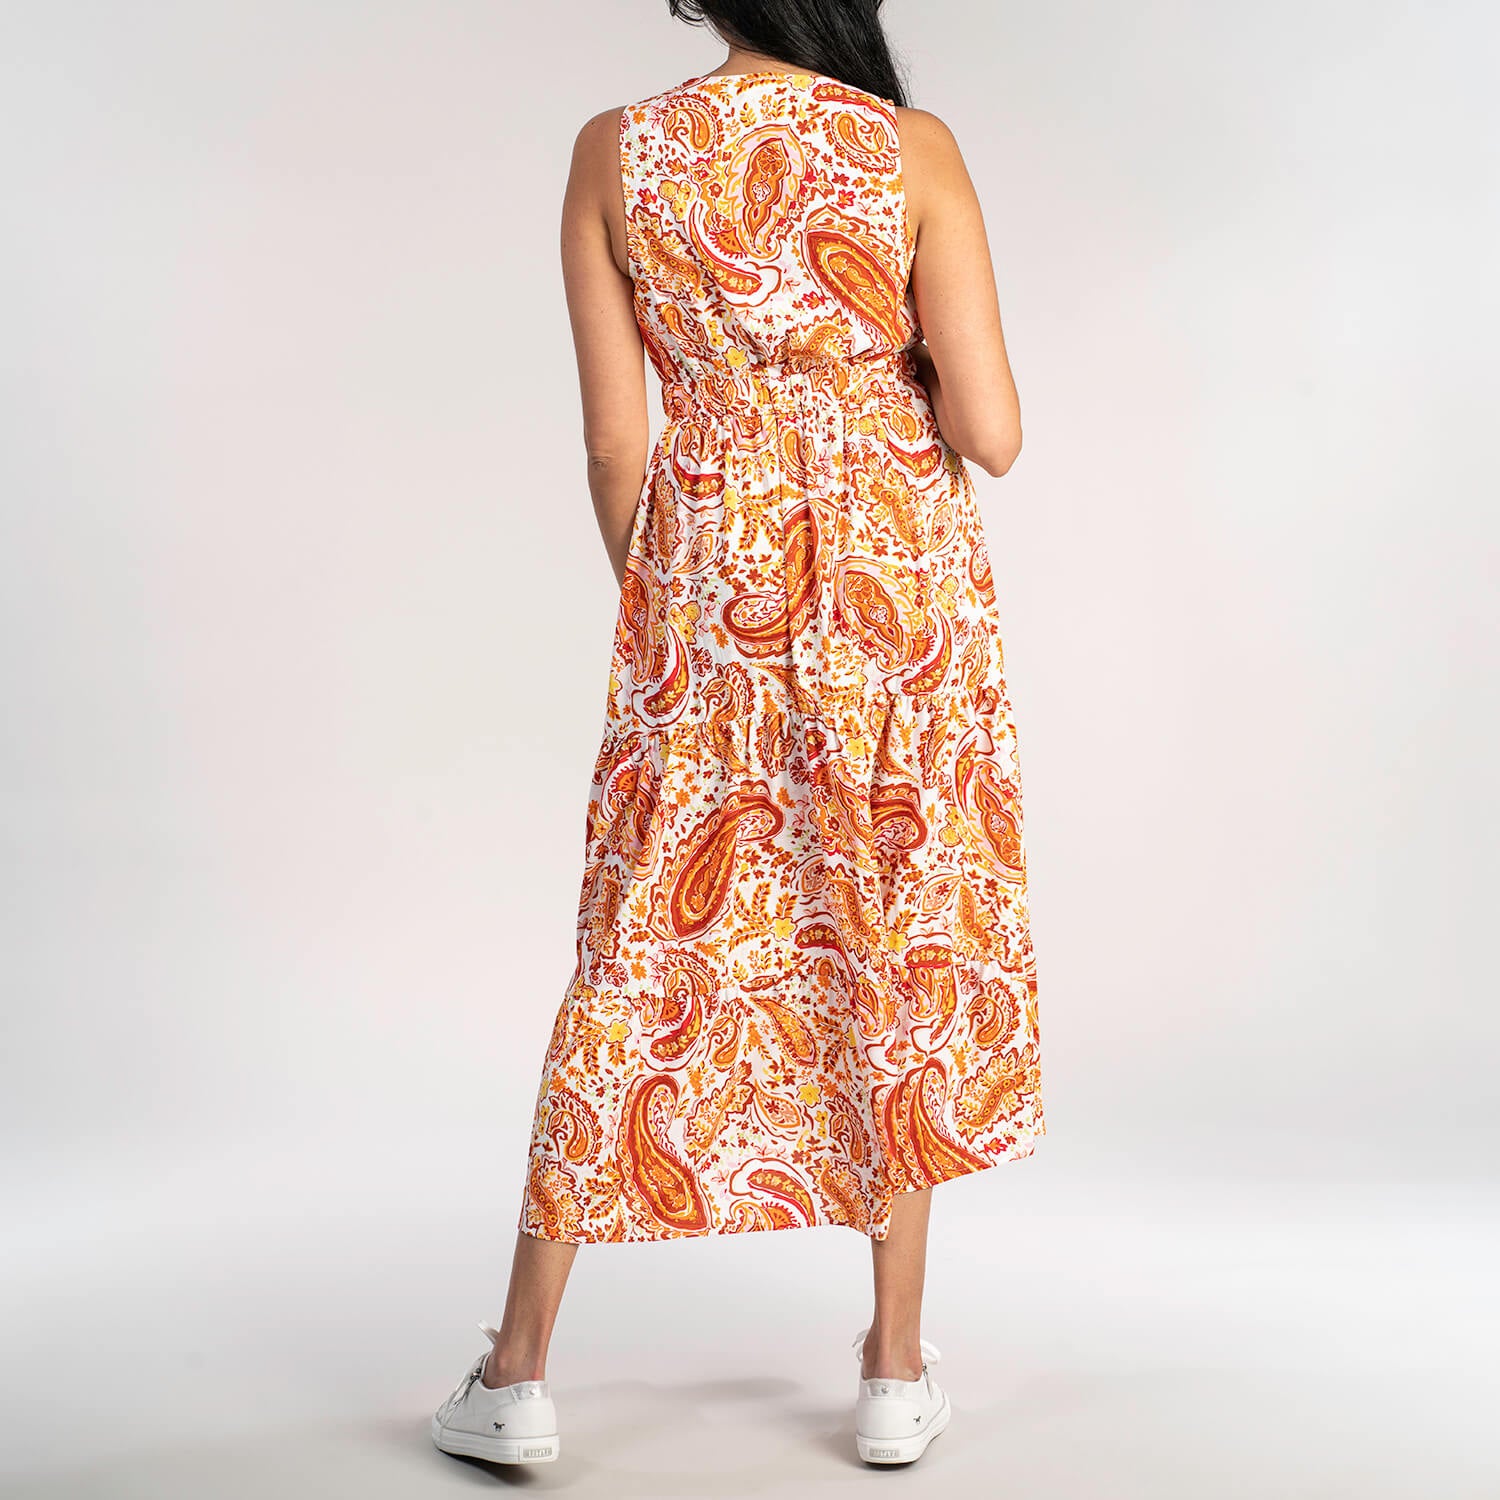 Naoise V Neck Sleeveless Dress - Coral 5 Shaws Department Stores